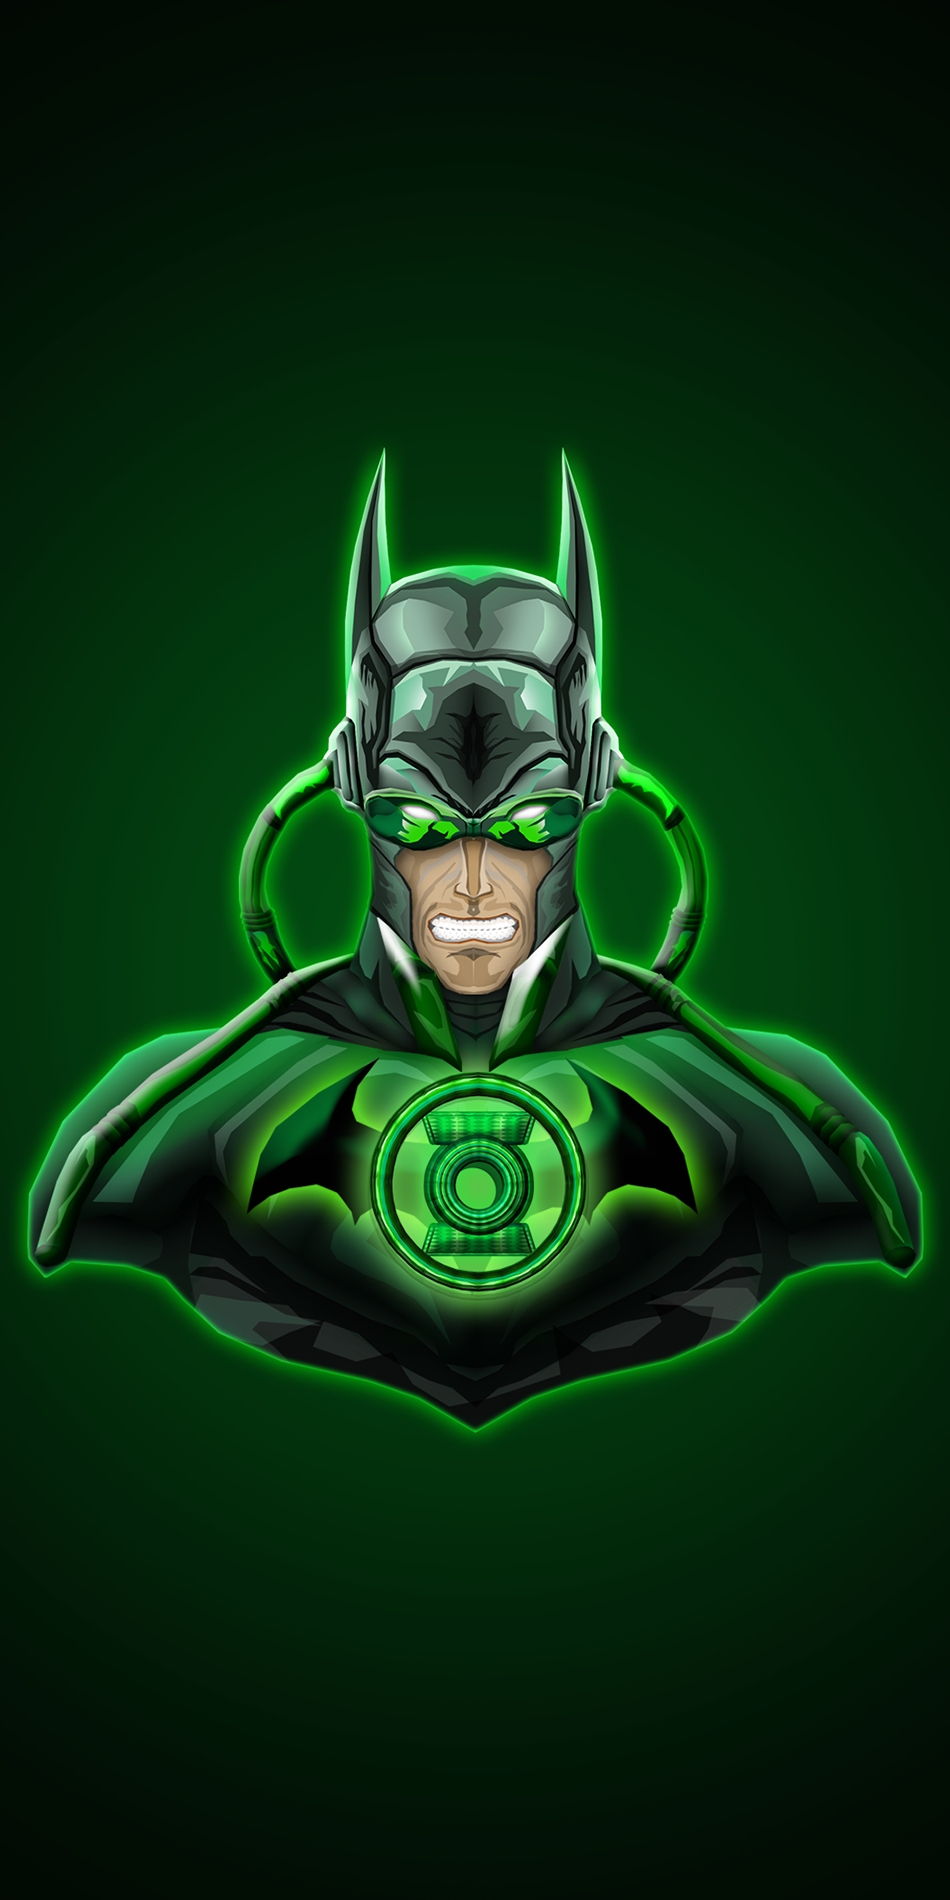 General 950x1900 DC Comics DC Universe DC Extended Universe Green Lantern green background simple background portrait display minimalism superhero